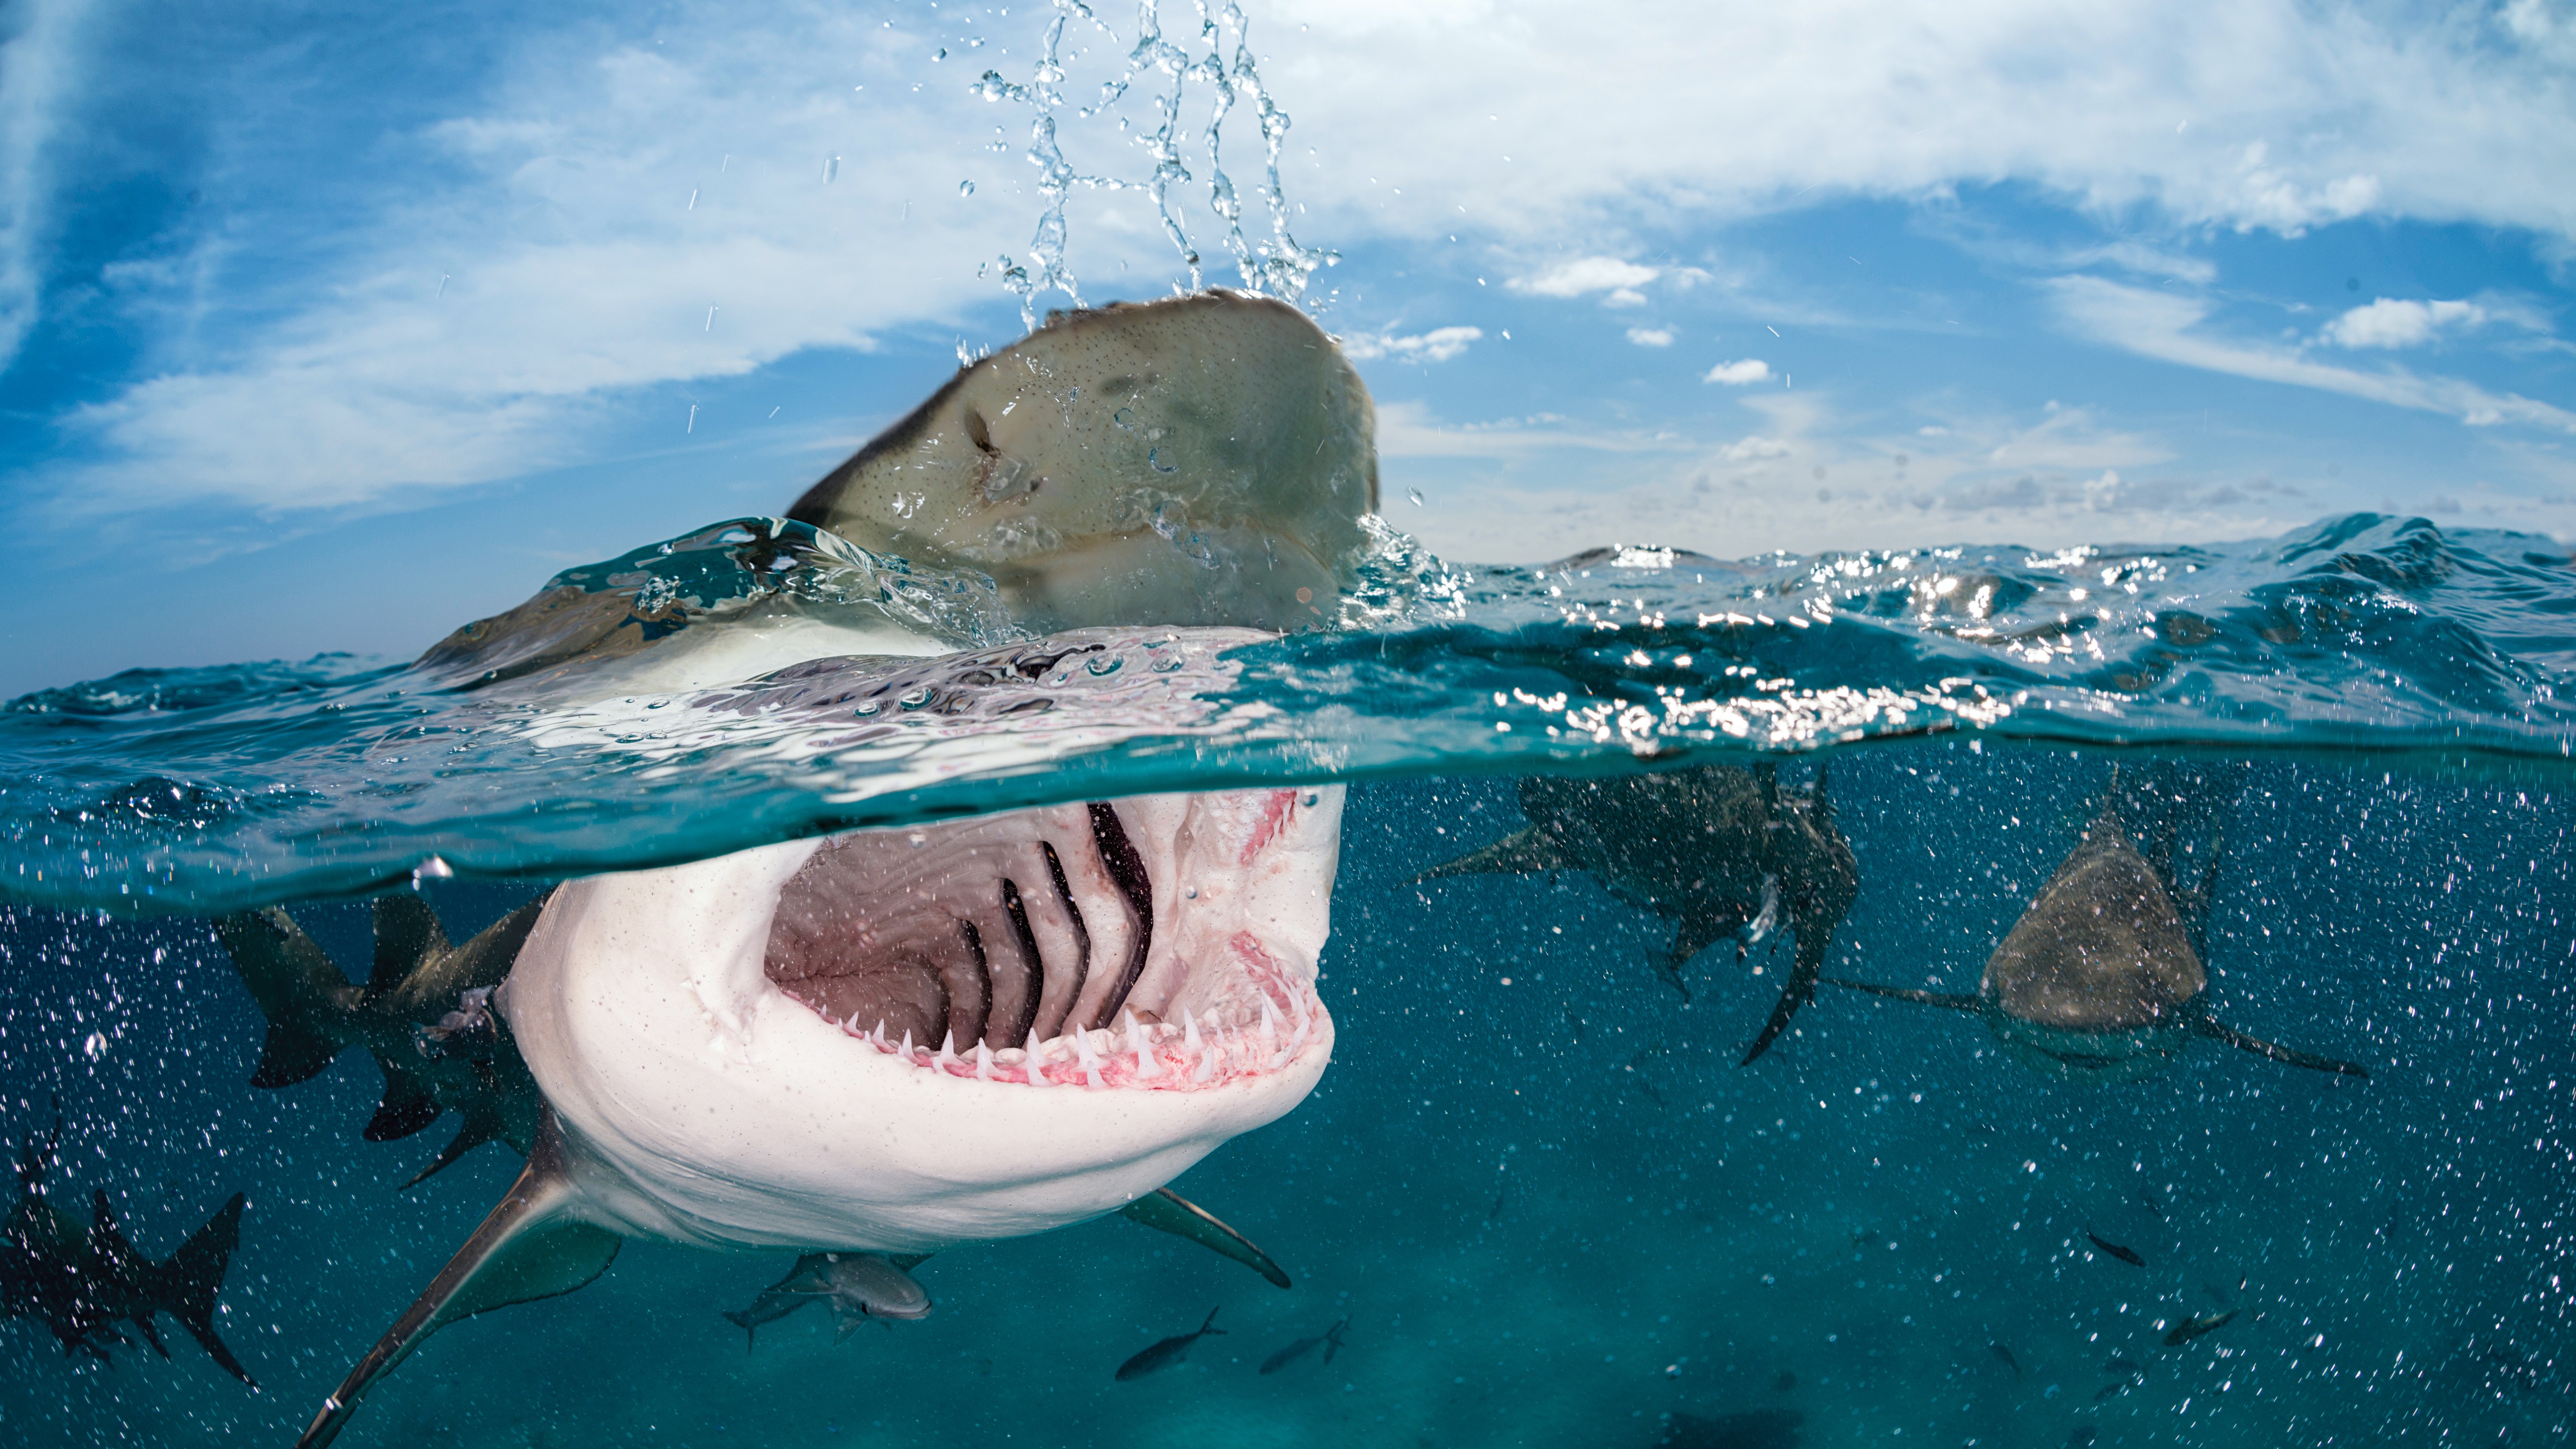 Wallpaper Shark, 5k, 4k wallpaper, 8k, Indian, Caribbean, Atlantic